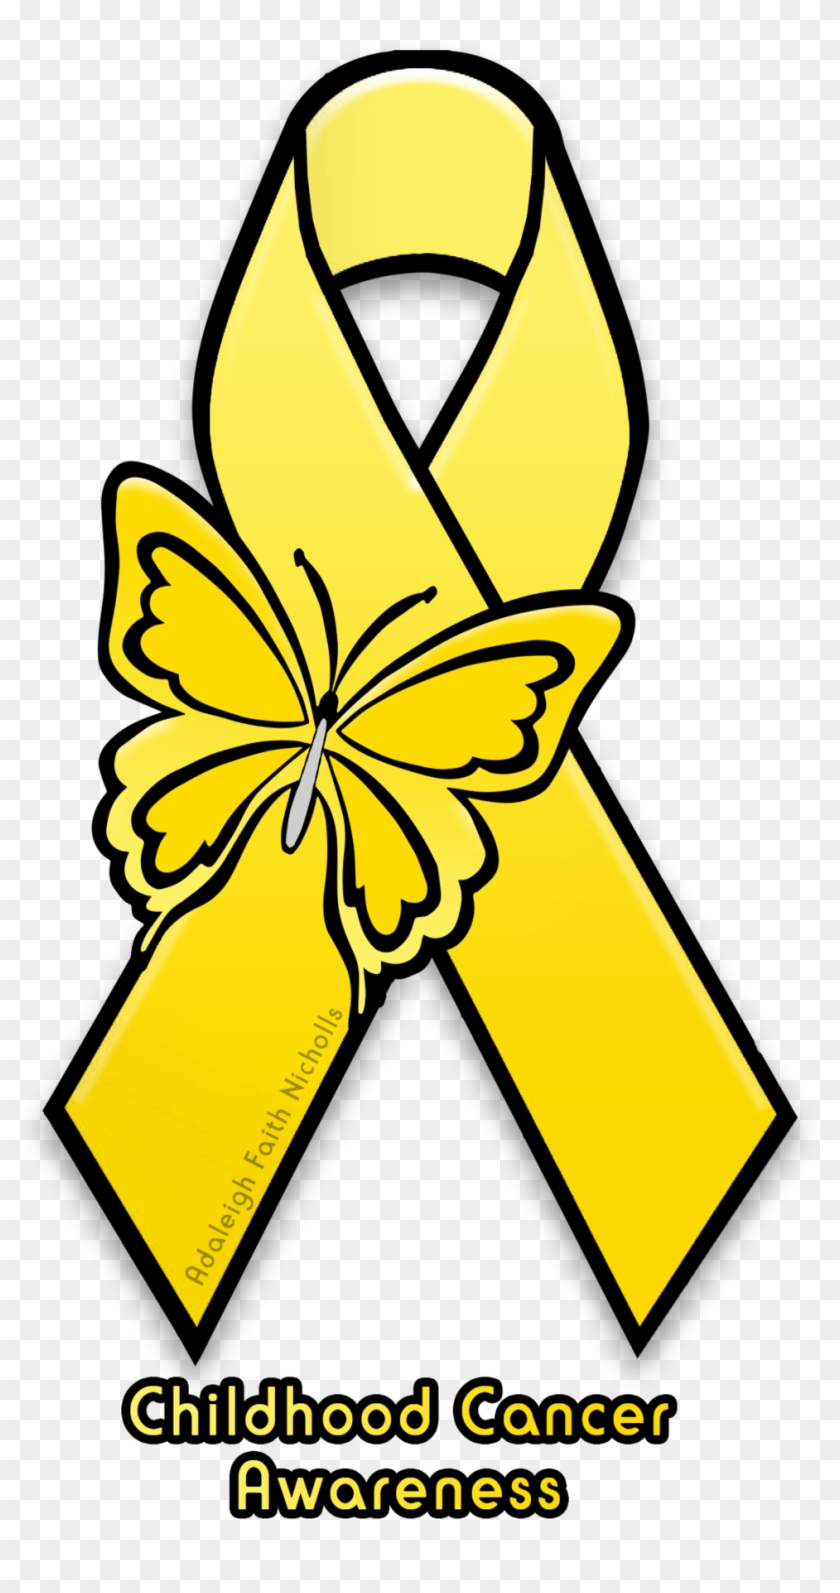 Adaleighfaith 8 2 Childhood Cancer Awareness Ribbon - Childhood Cancer Awareness Ribbon Clipart #102284